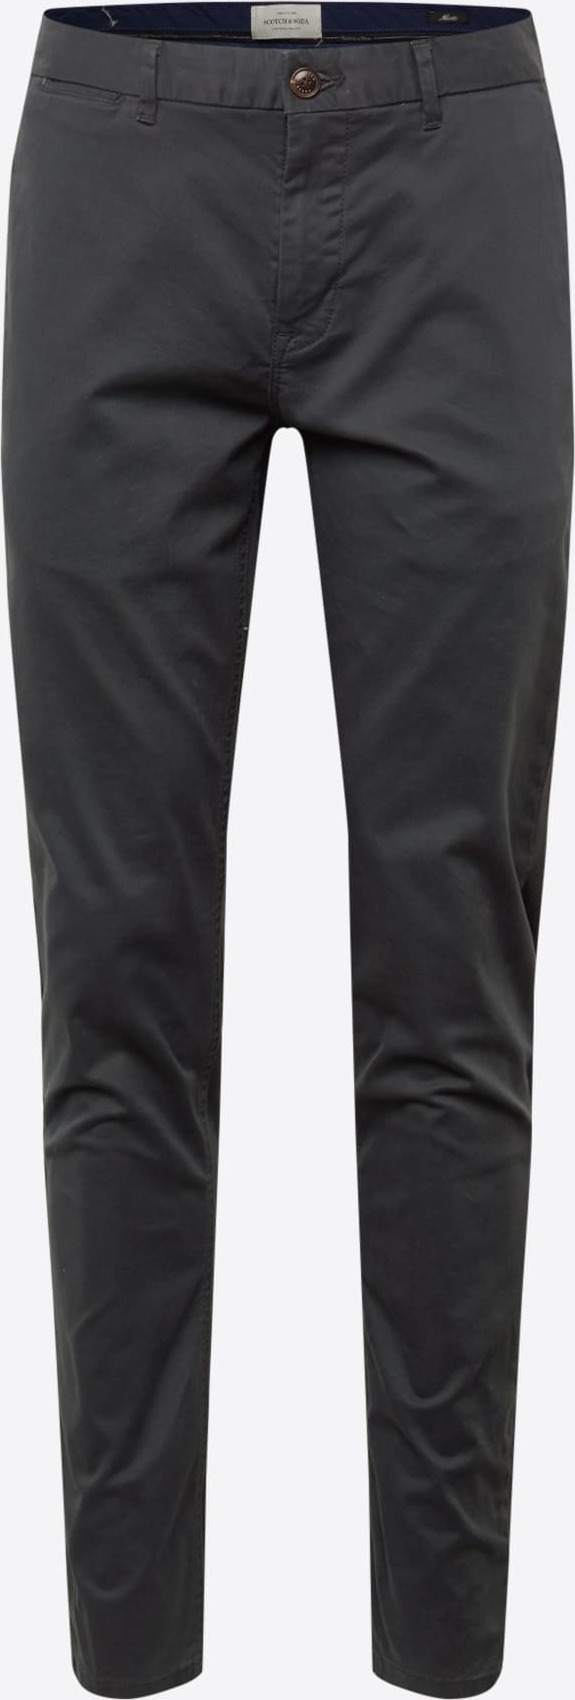 SCOTCH & SODA Chino kalhoty 'Mott' černá